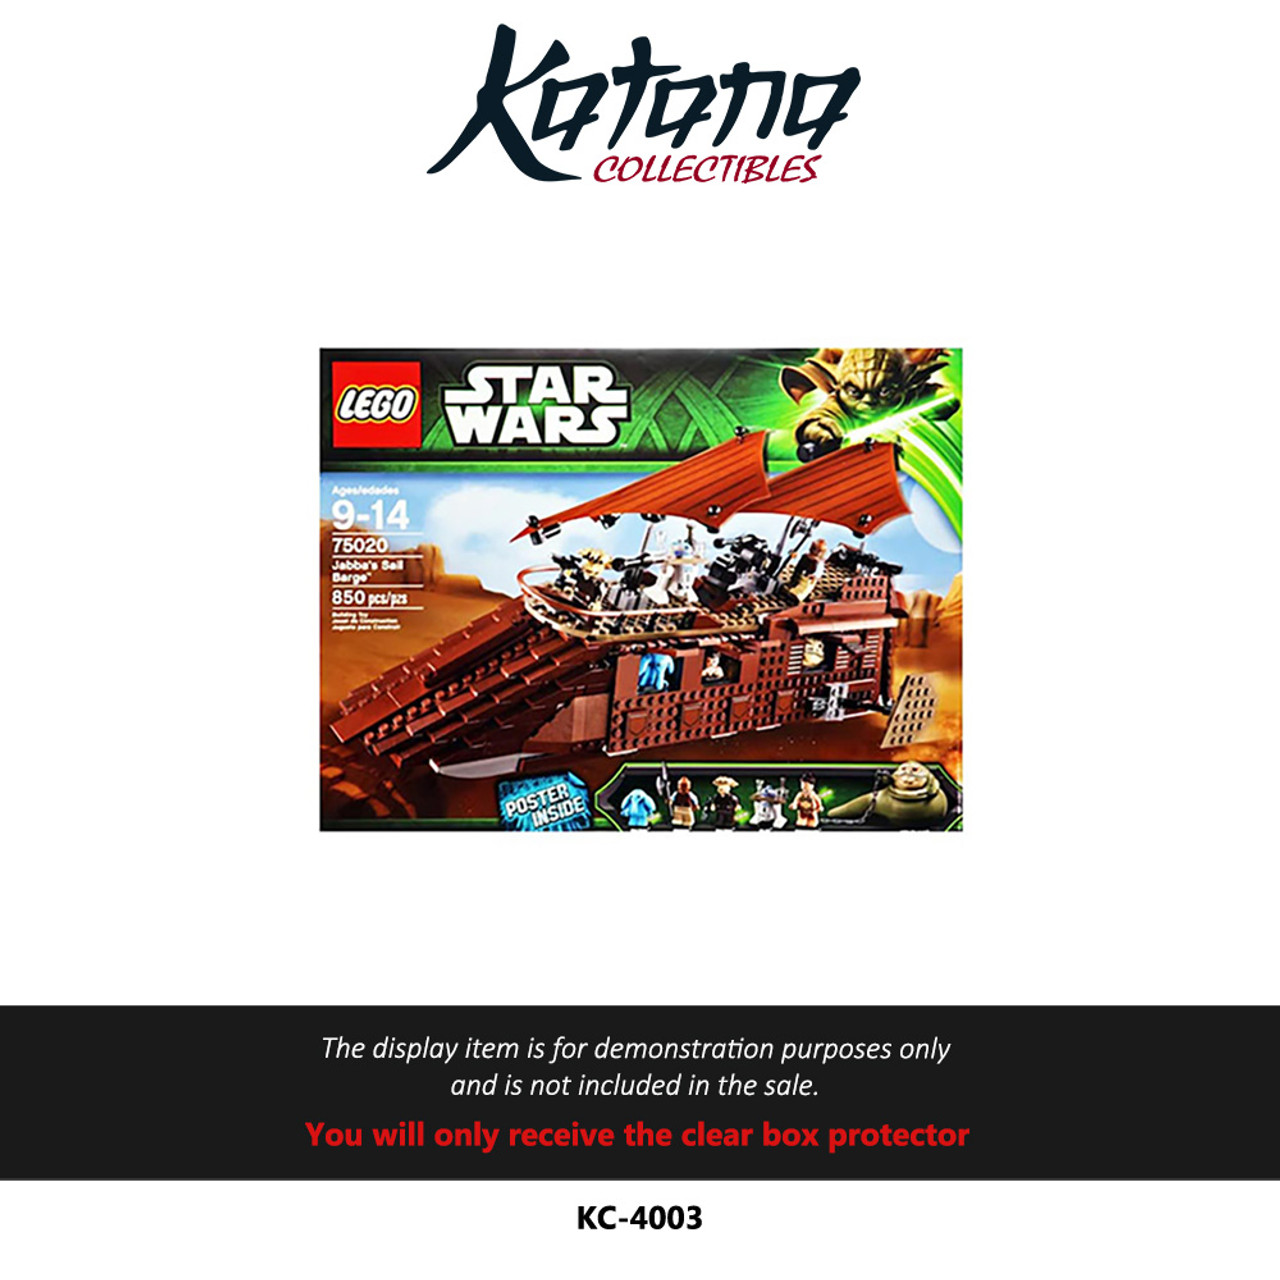 Katana Collectibles Protector For LEGO Star Wars Jabbas Sail Barge (75020)